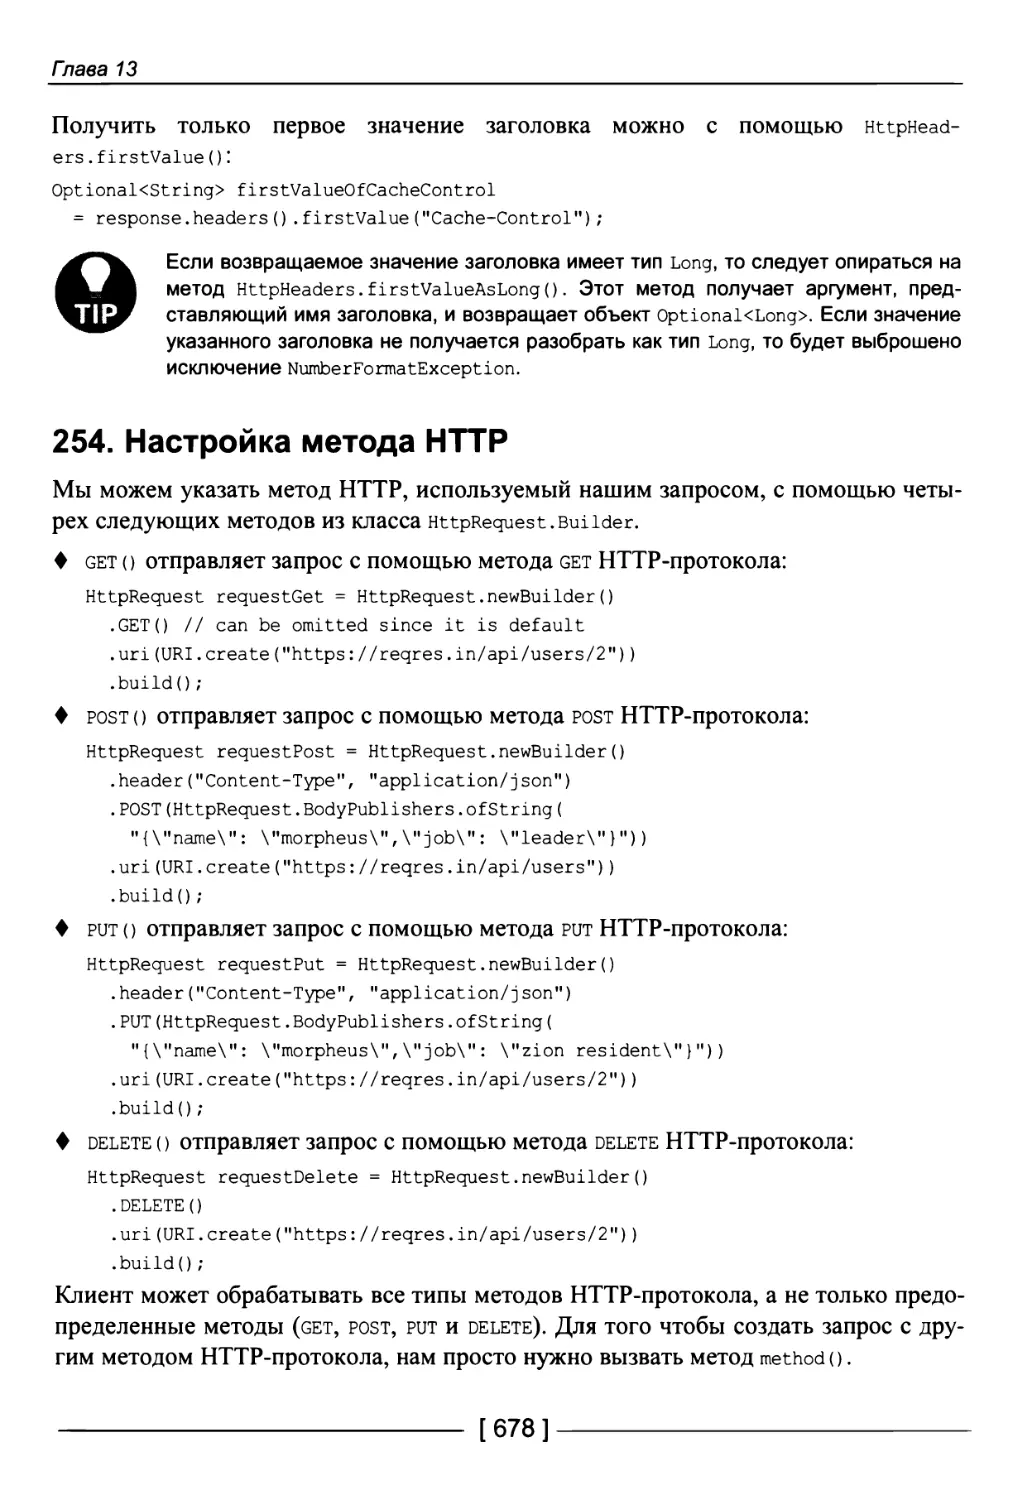 254. Настройка метода HTTP